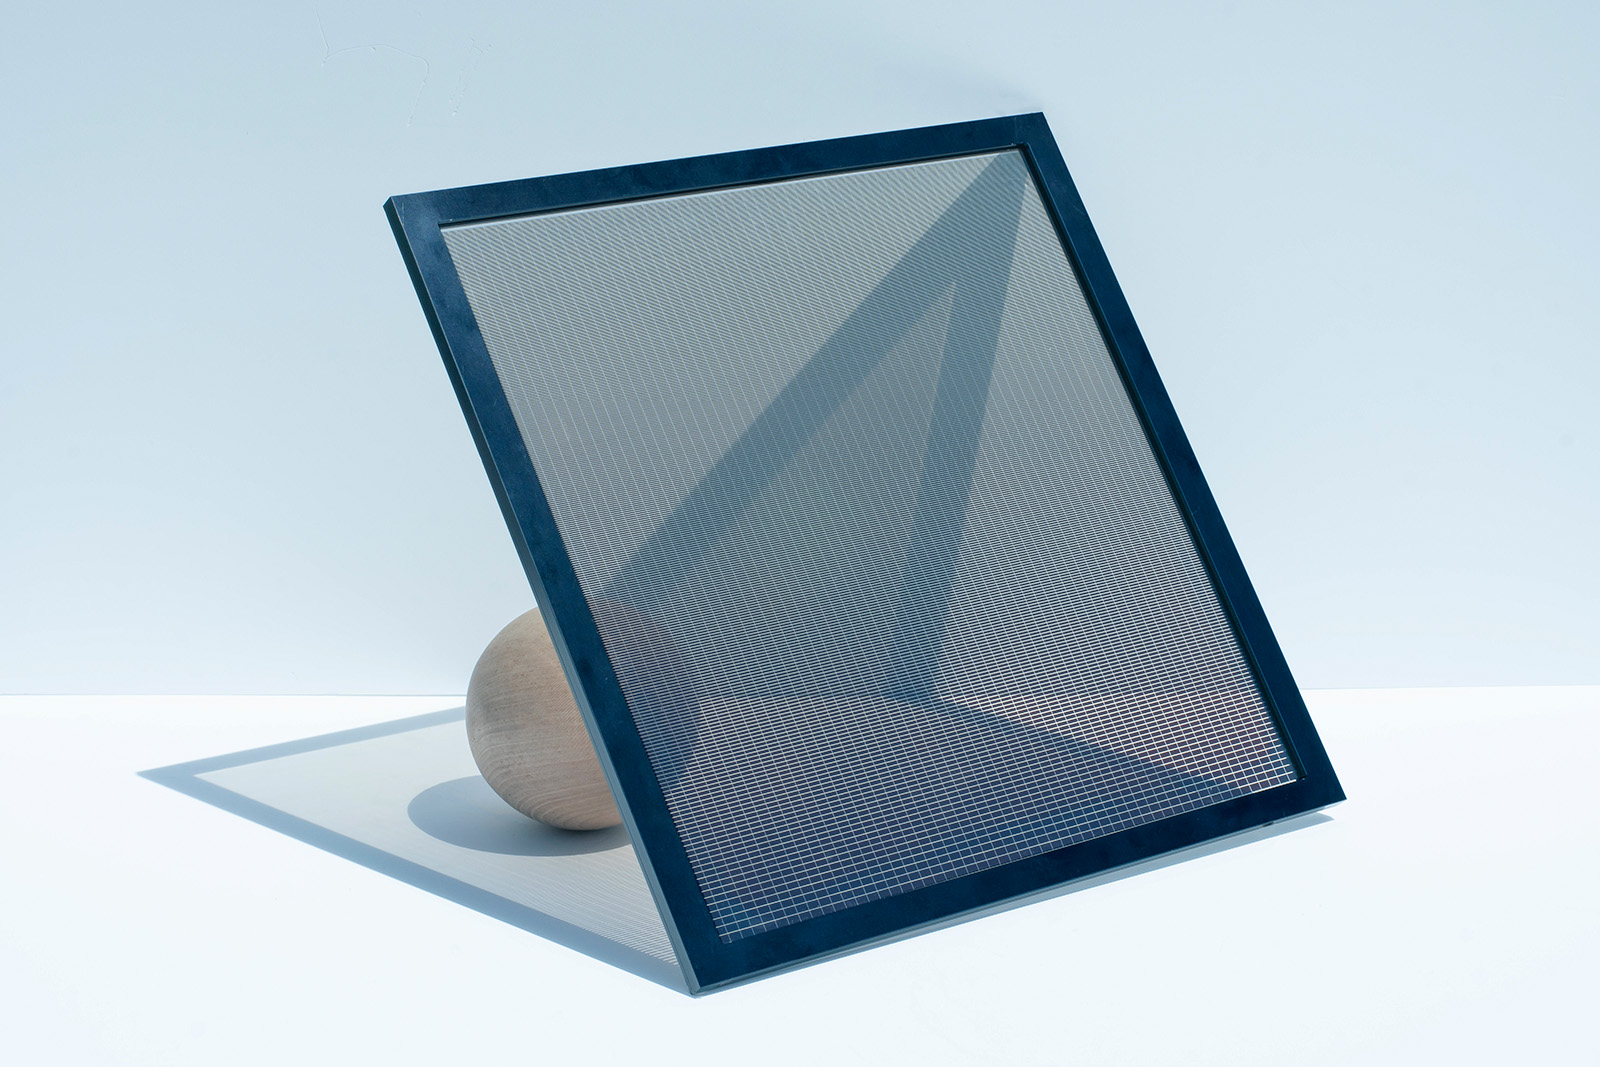 Photo: Perovskite-based solar cells printed on glass window